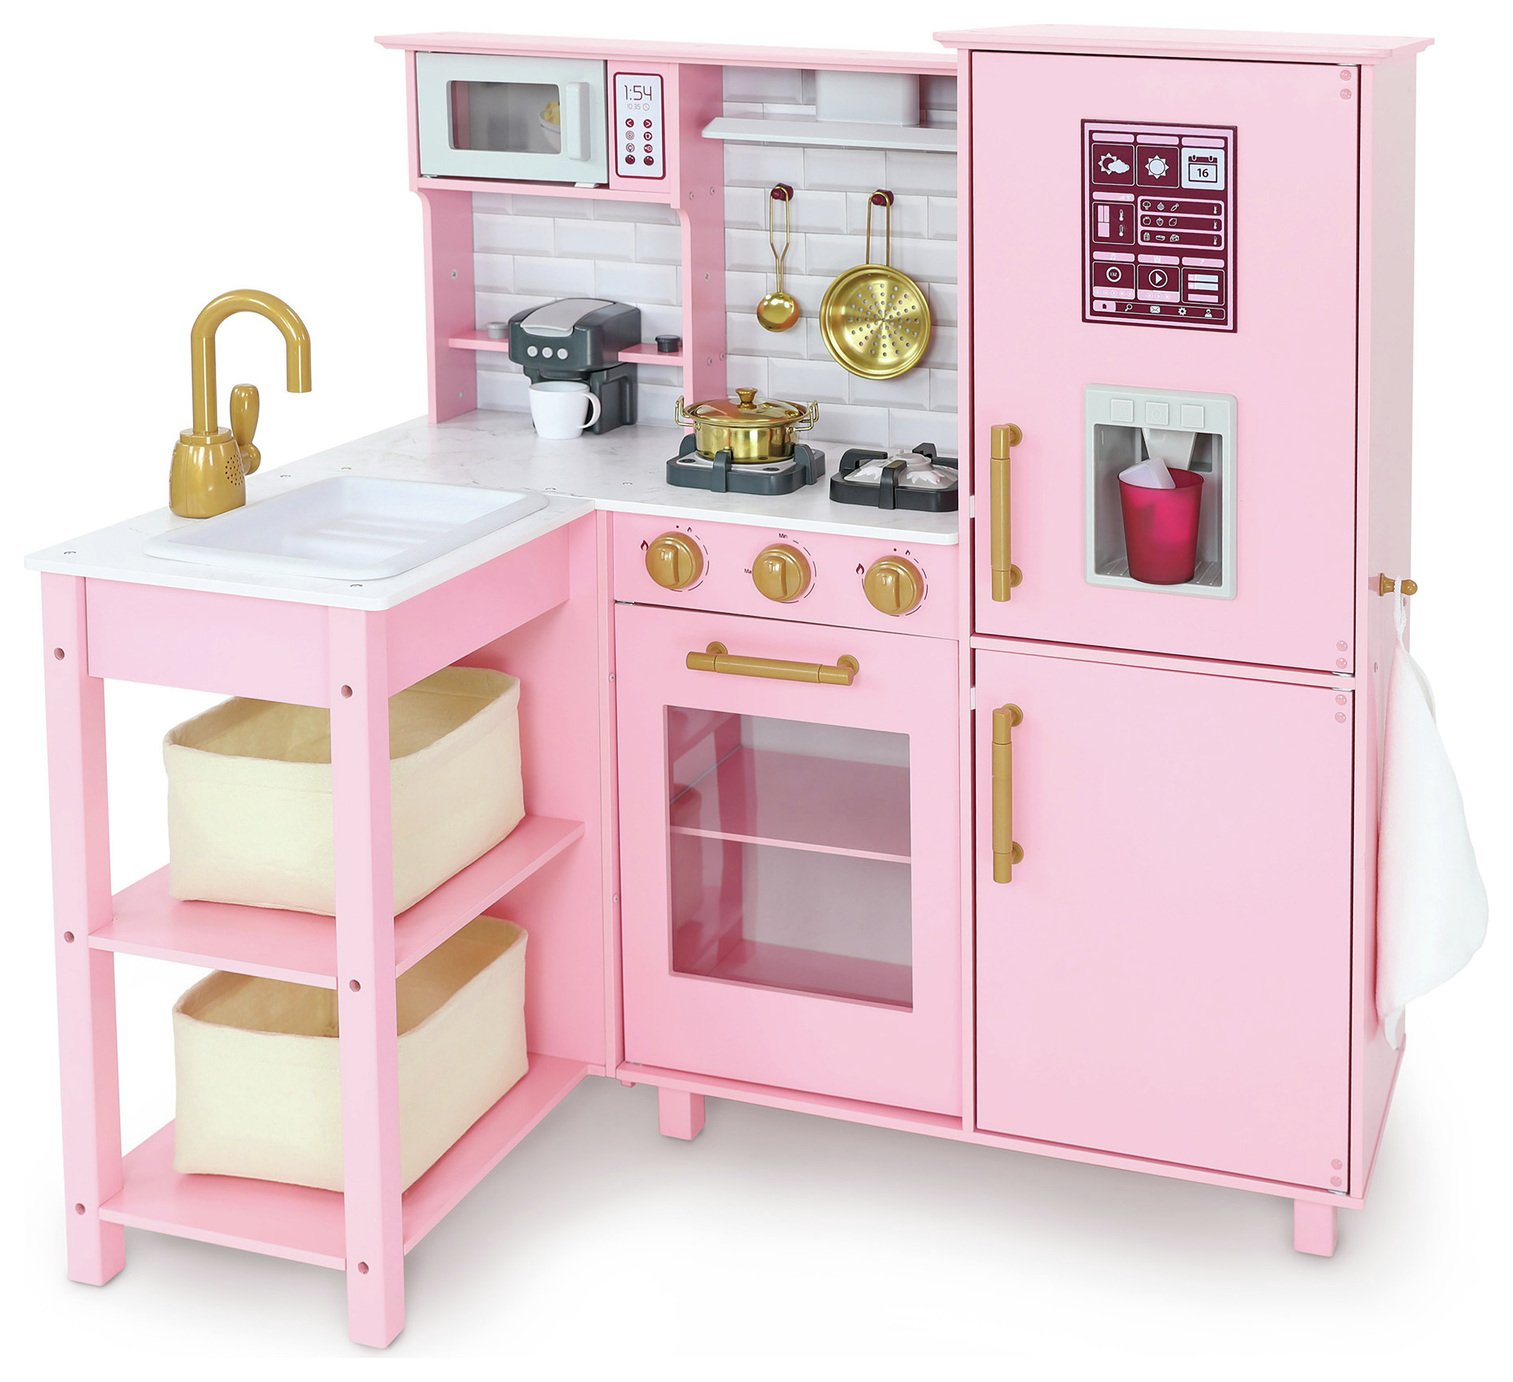 Chad Valley Wooden Kitchen with Breakfast Bar - Pink